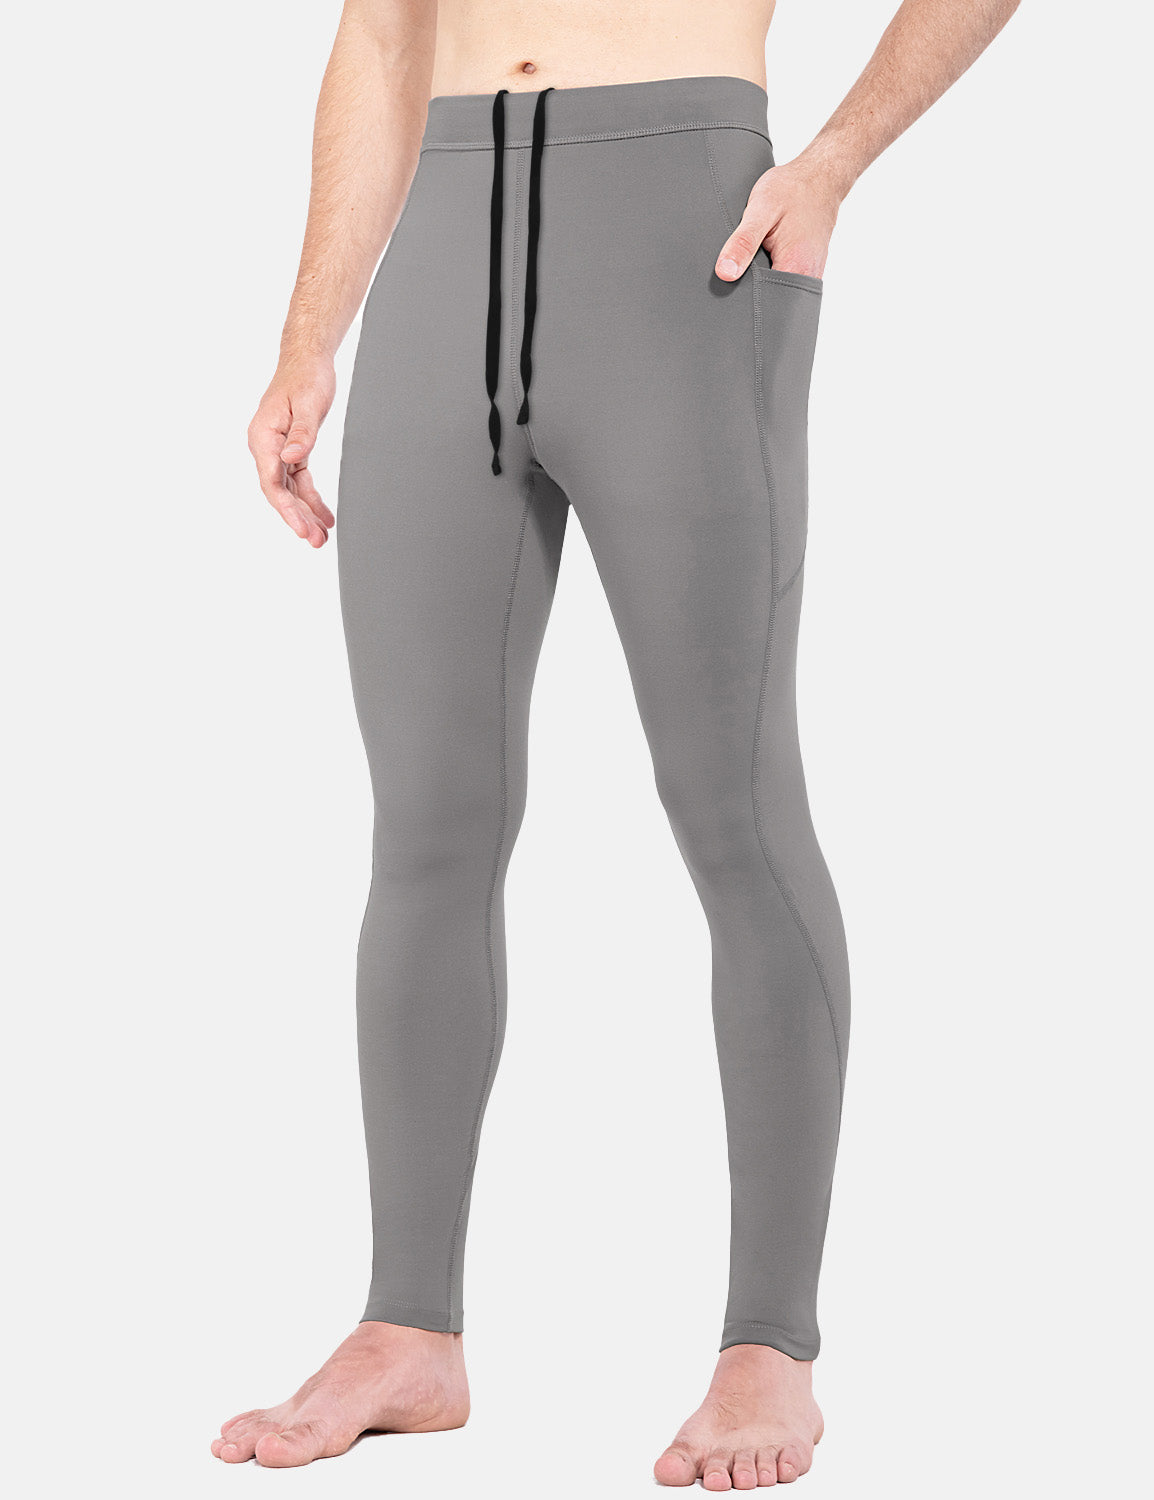 Baleaf Men's Fleece Lined Yoga Tight Pants cbh044 Gray Front